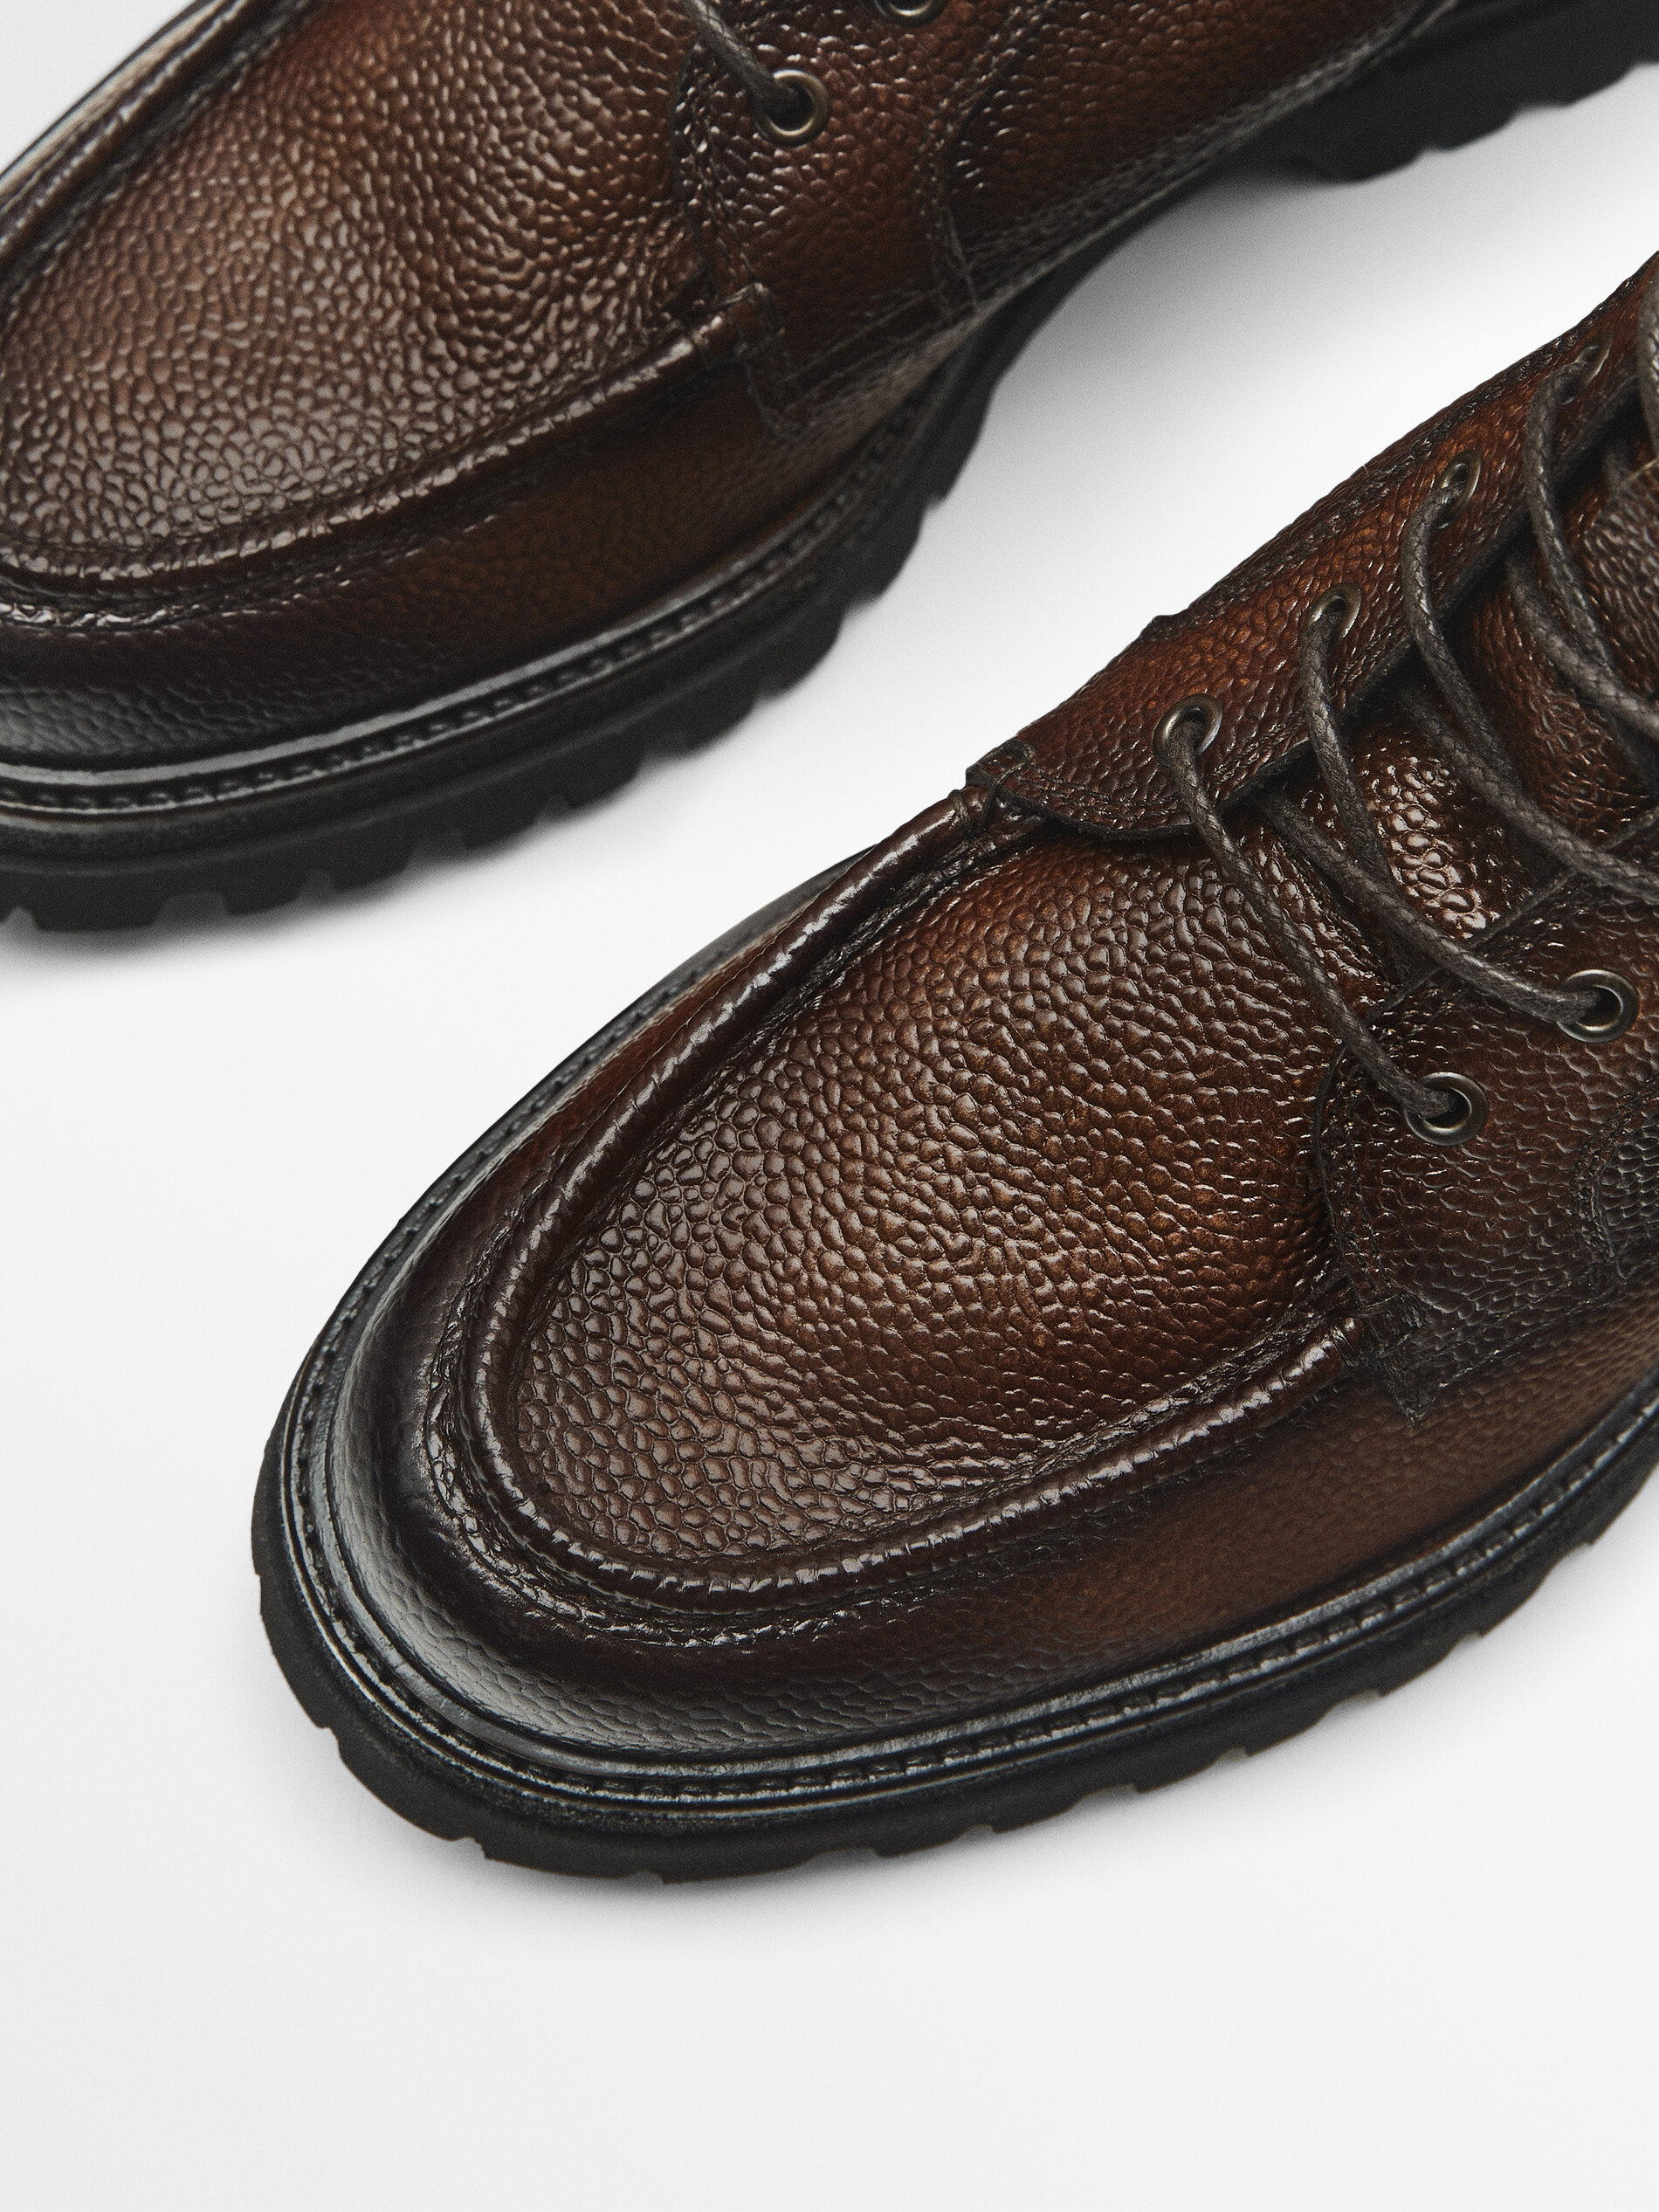 Massimo Dutti Leather Moc Toe Boots - Limited Edition - Big Apple Buddy